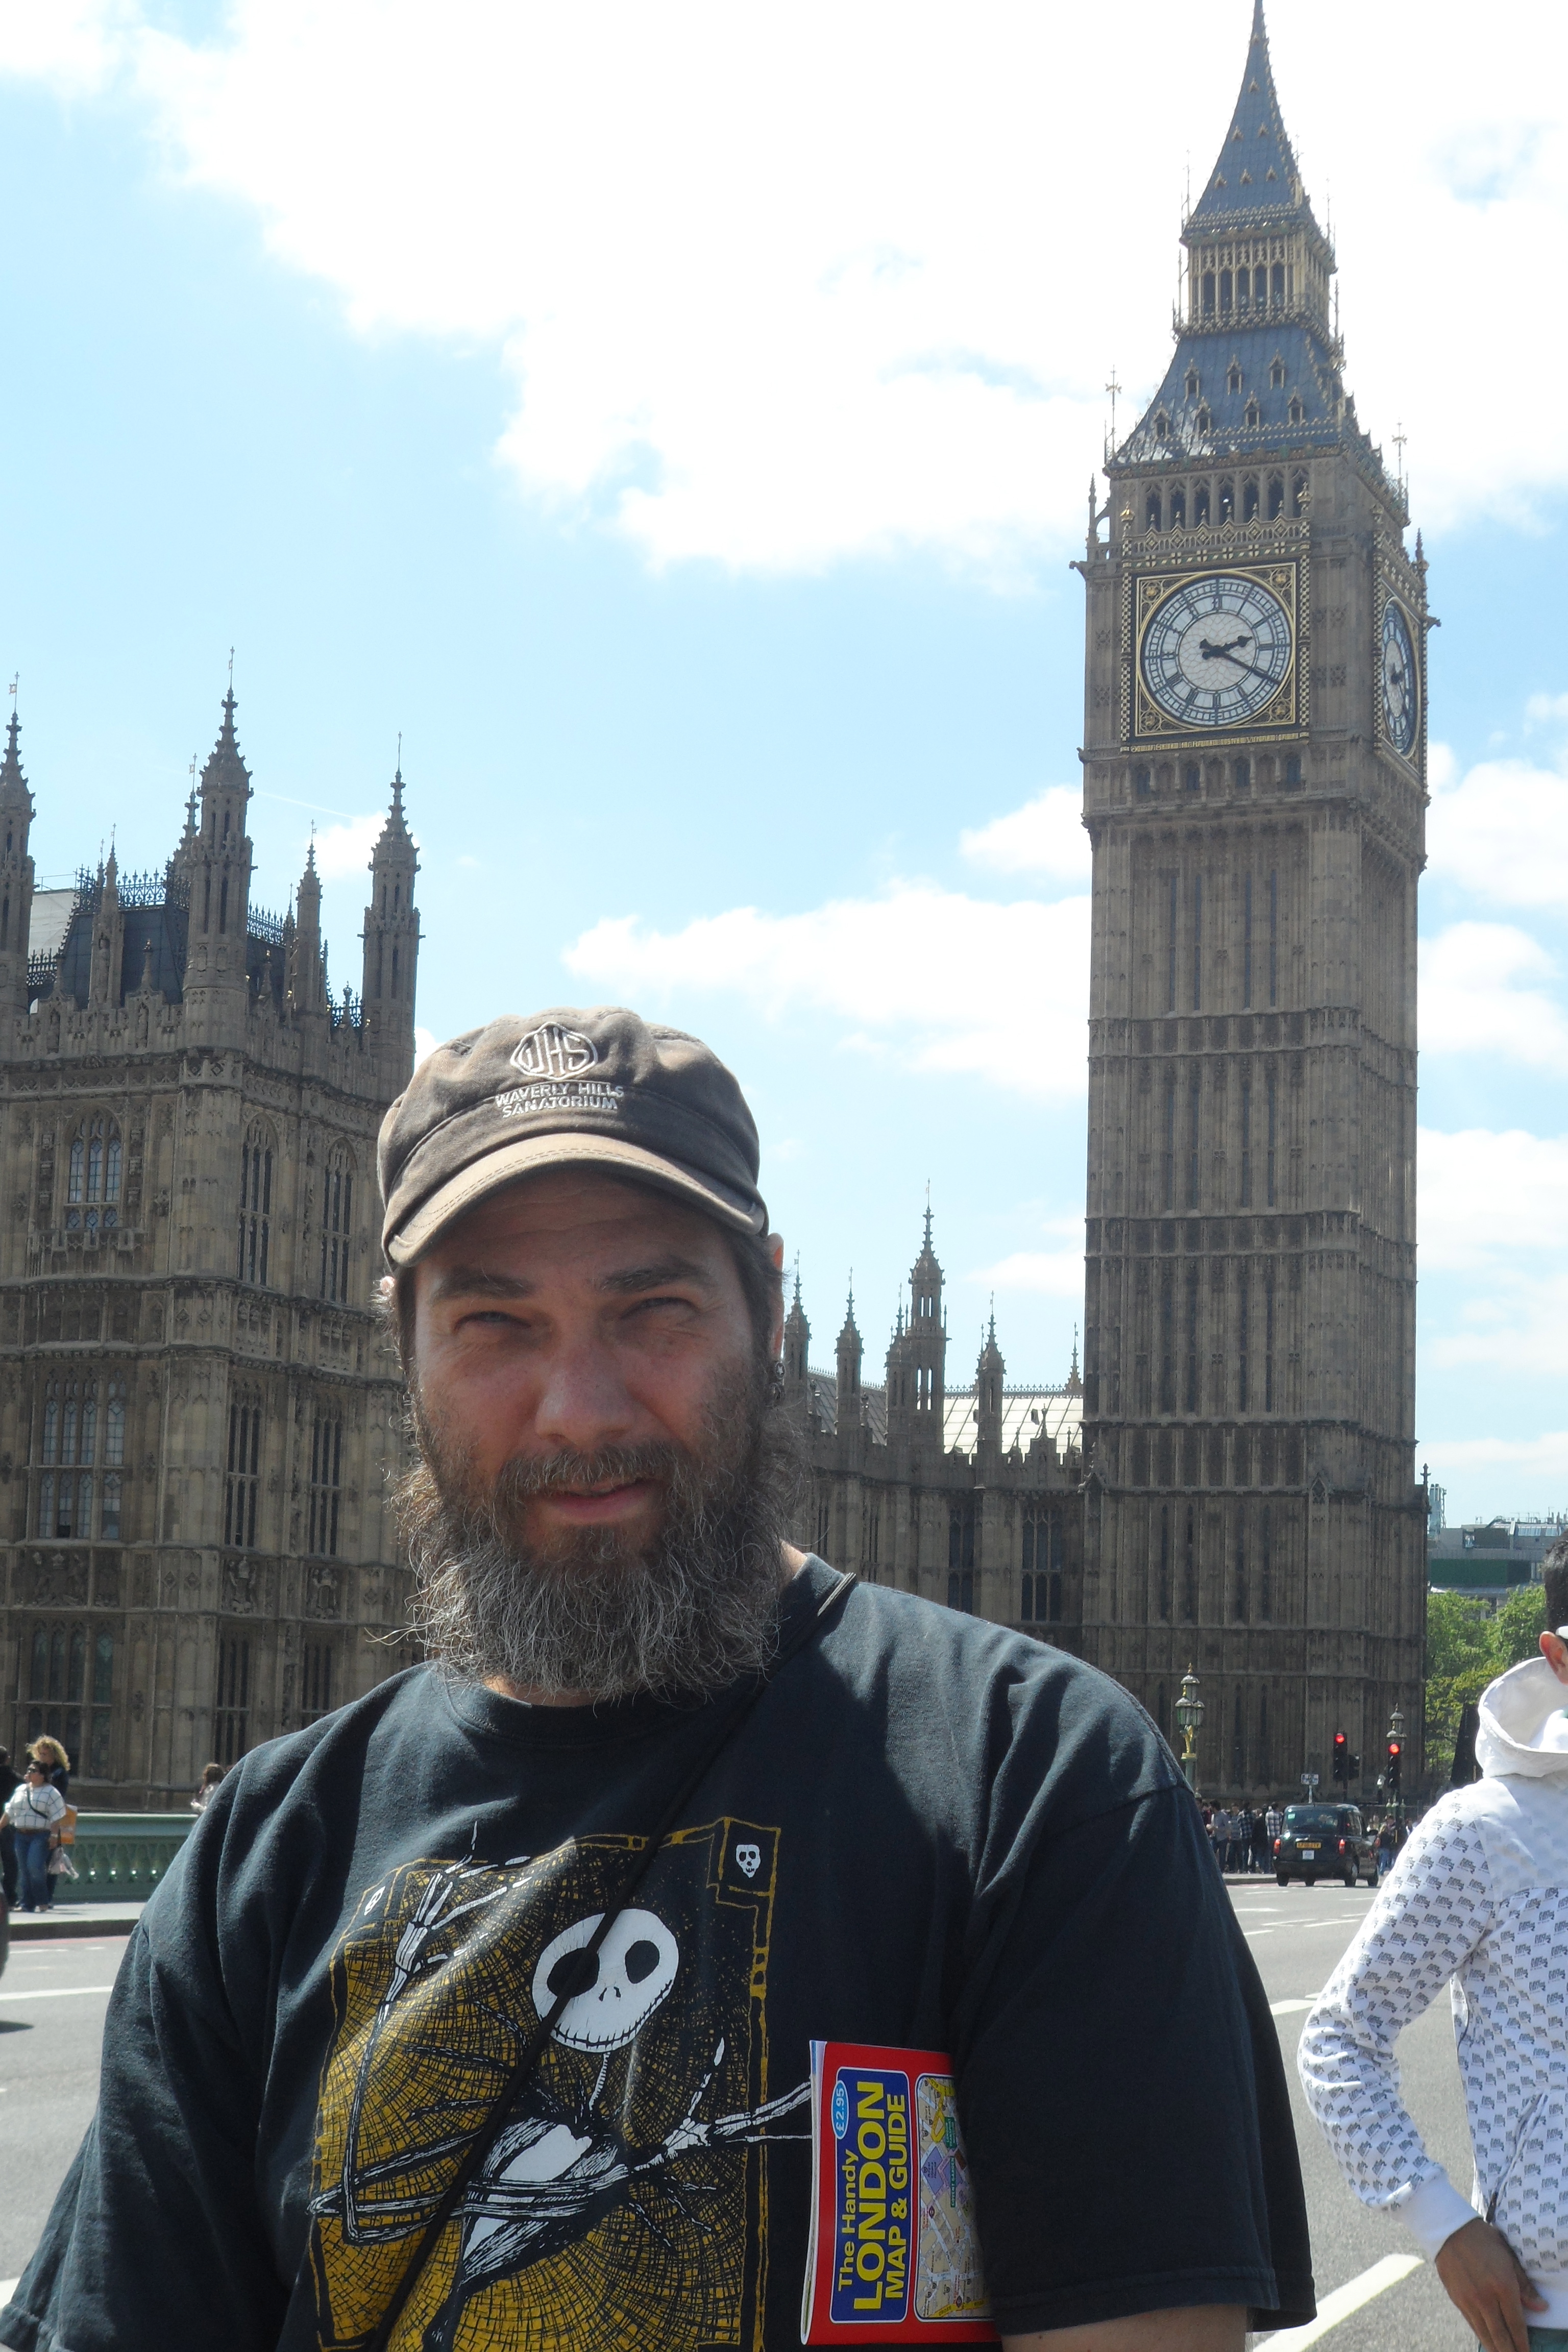 Jude S. Walko, Westminster Bridge, London, England, UK. June 2013.